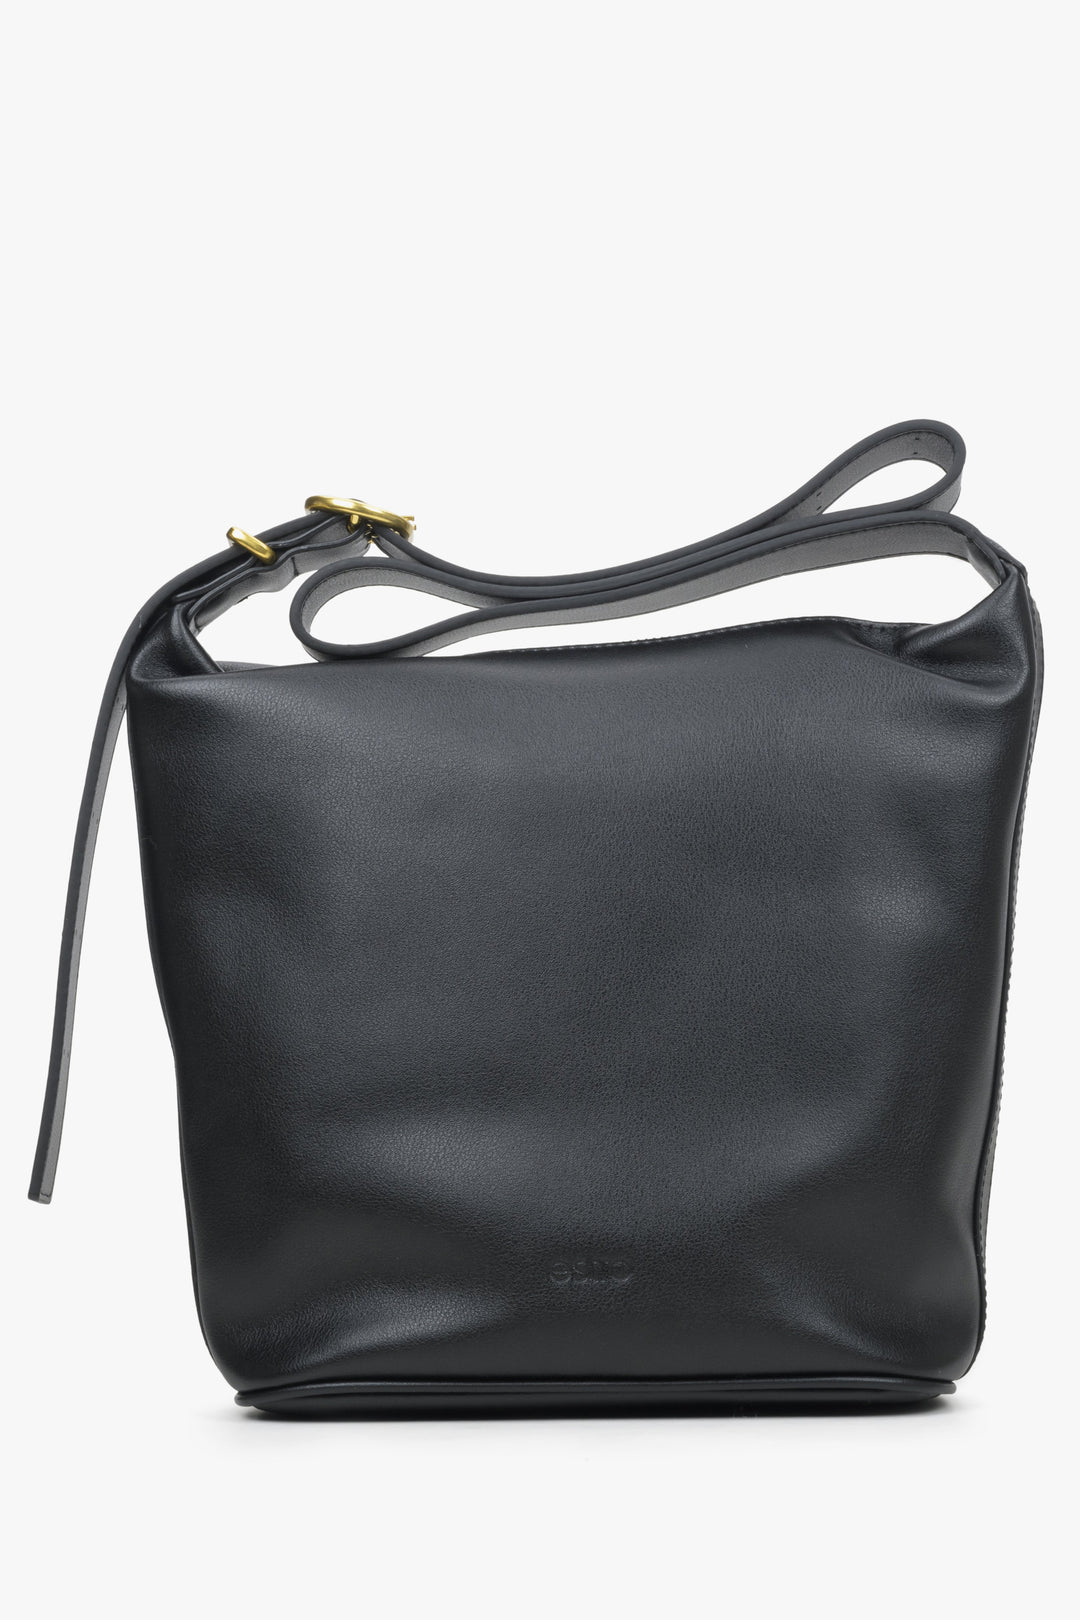 Black leather bucket style Estro bag.